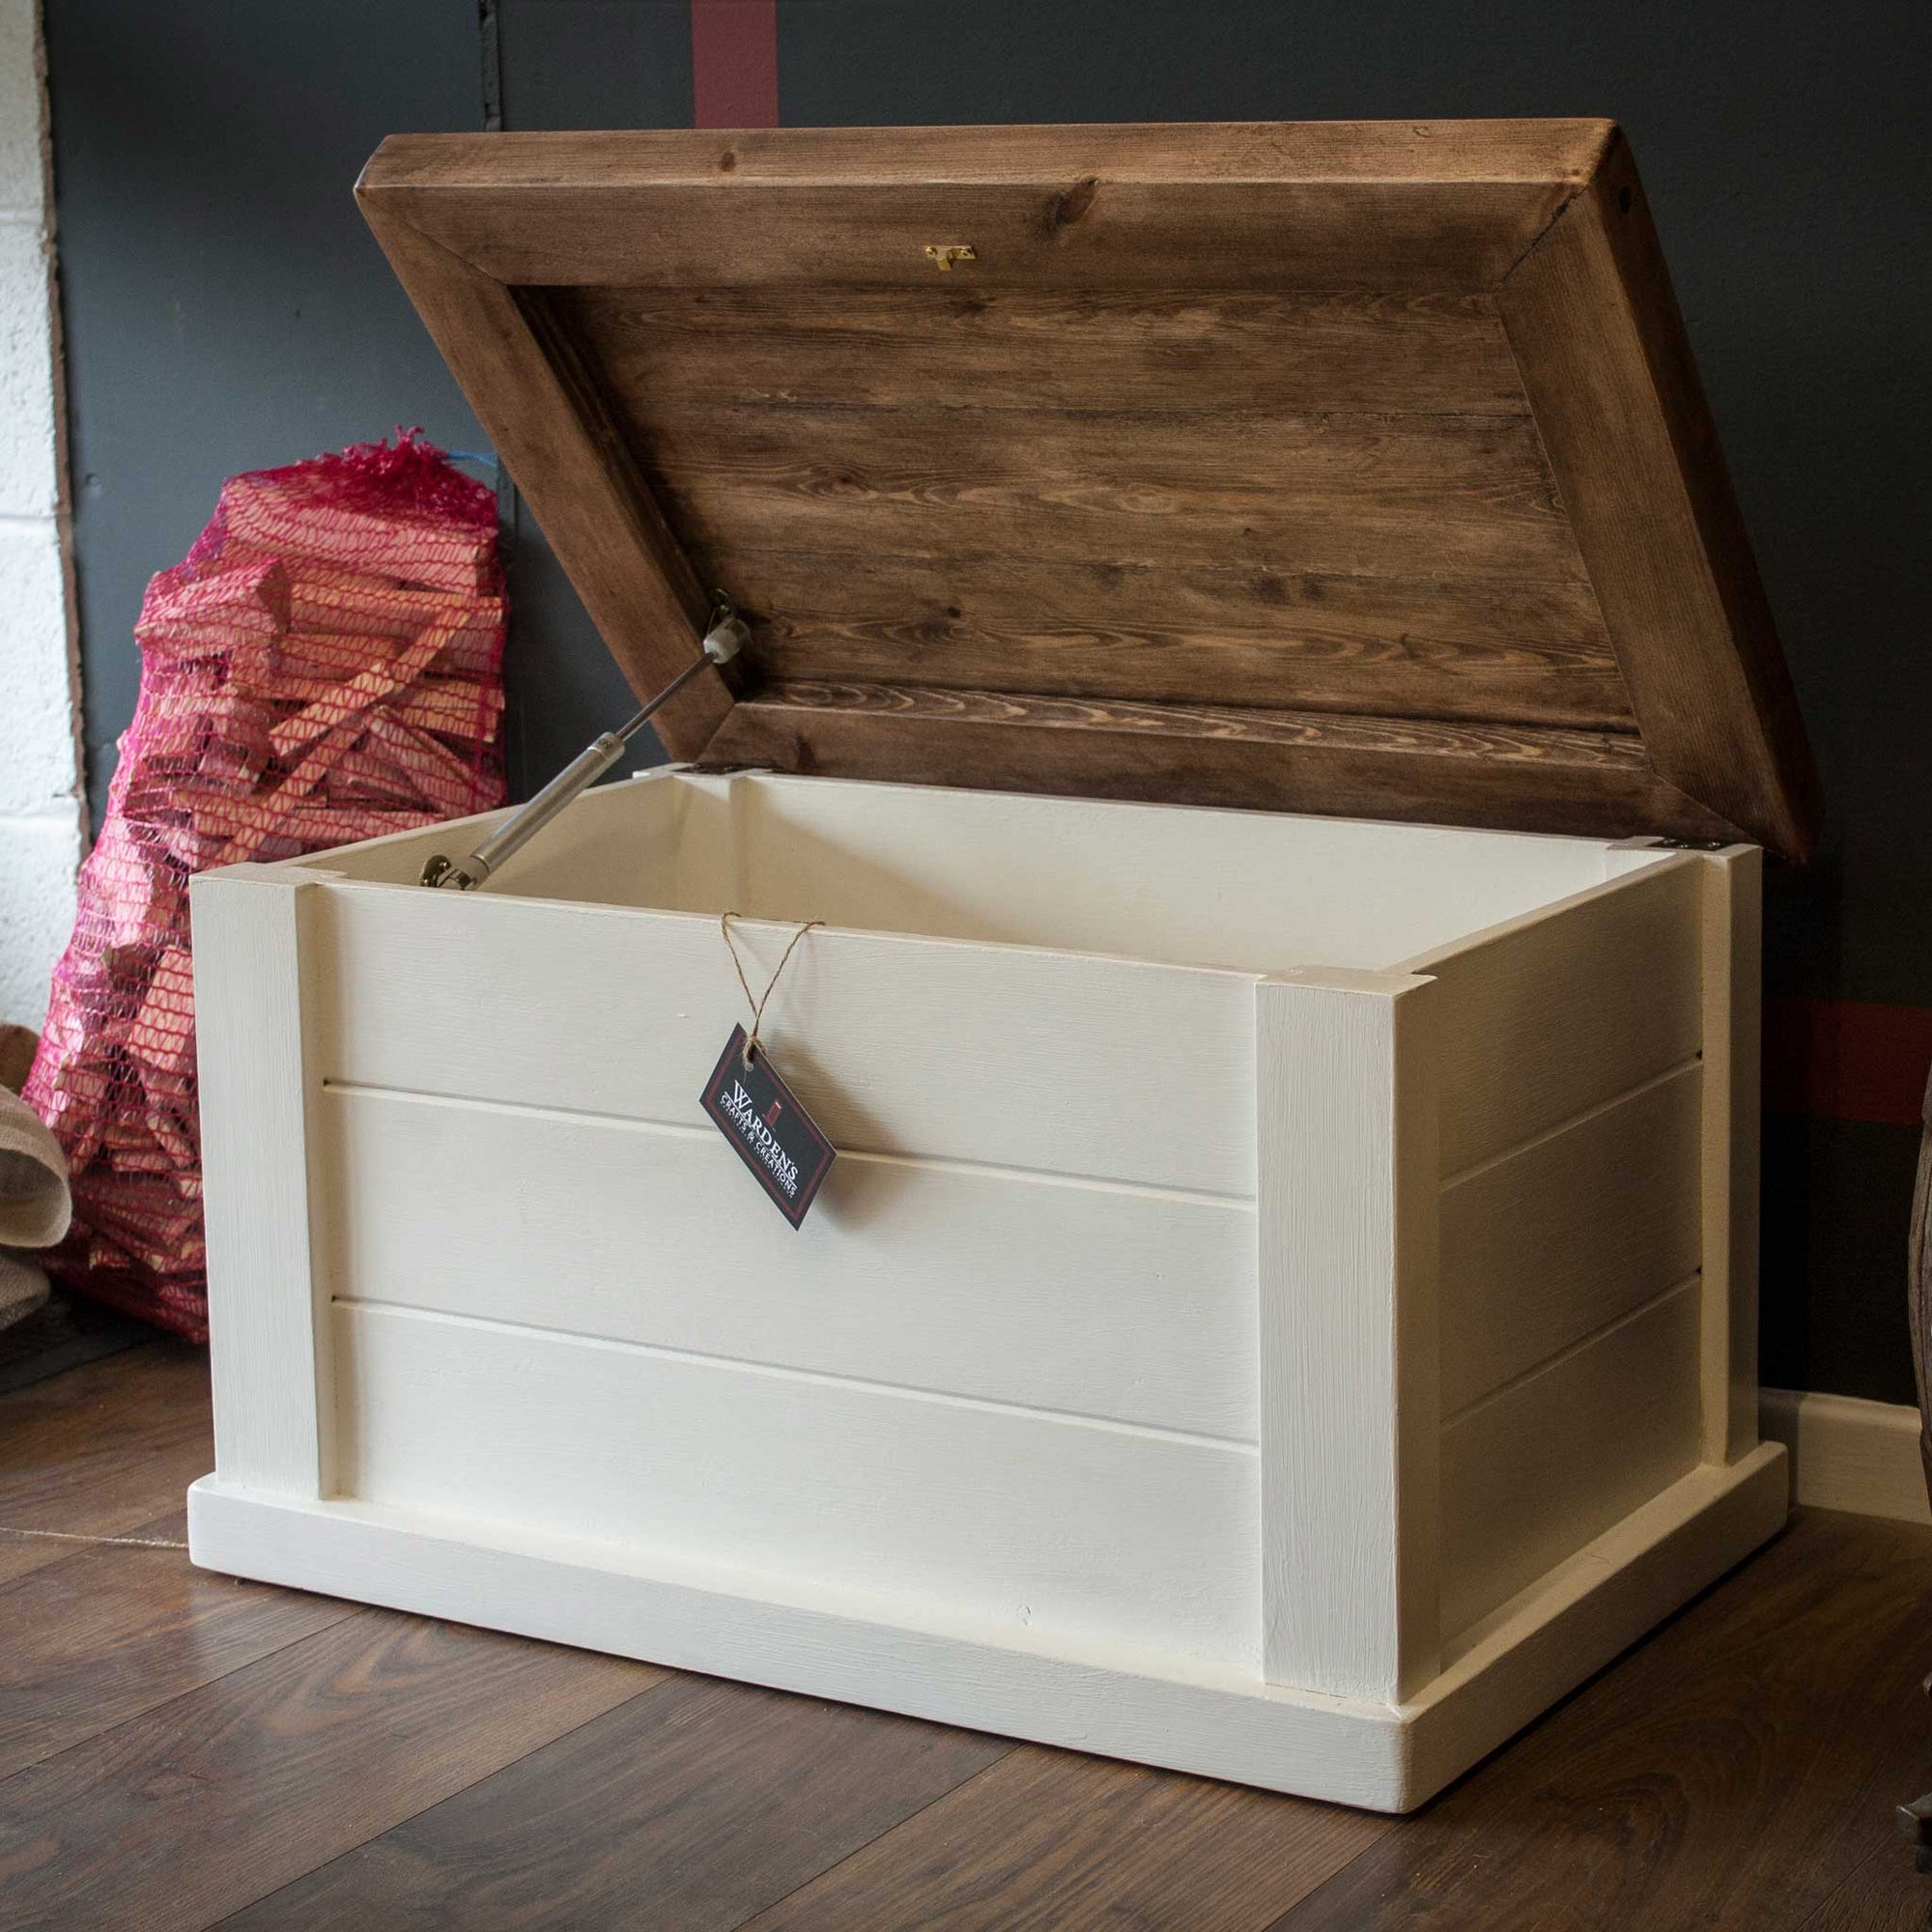 Bedroom Blanket Box | Home Storage ottoman | Warden's Crafts & Creations